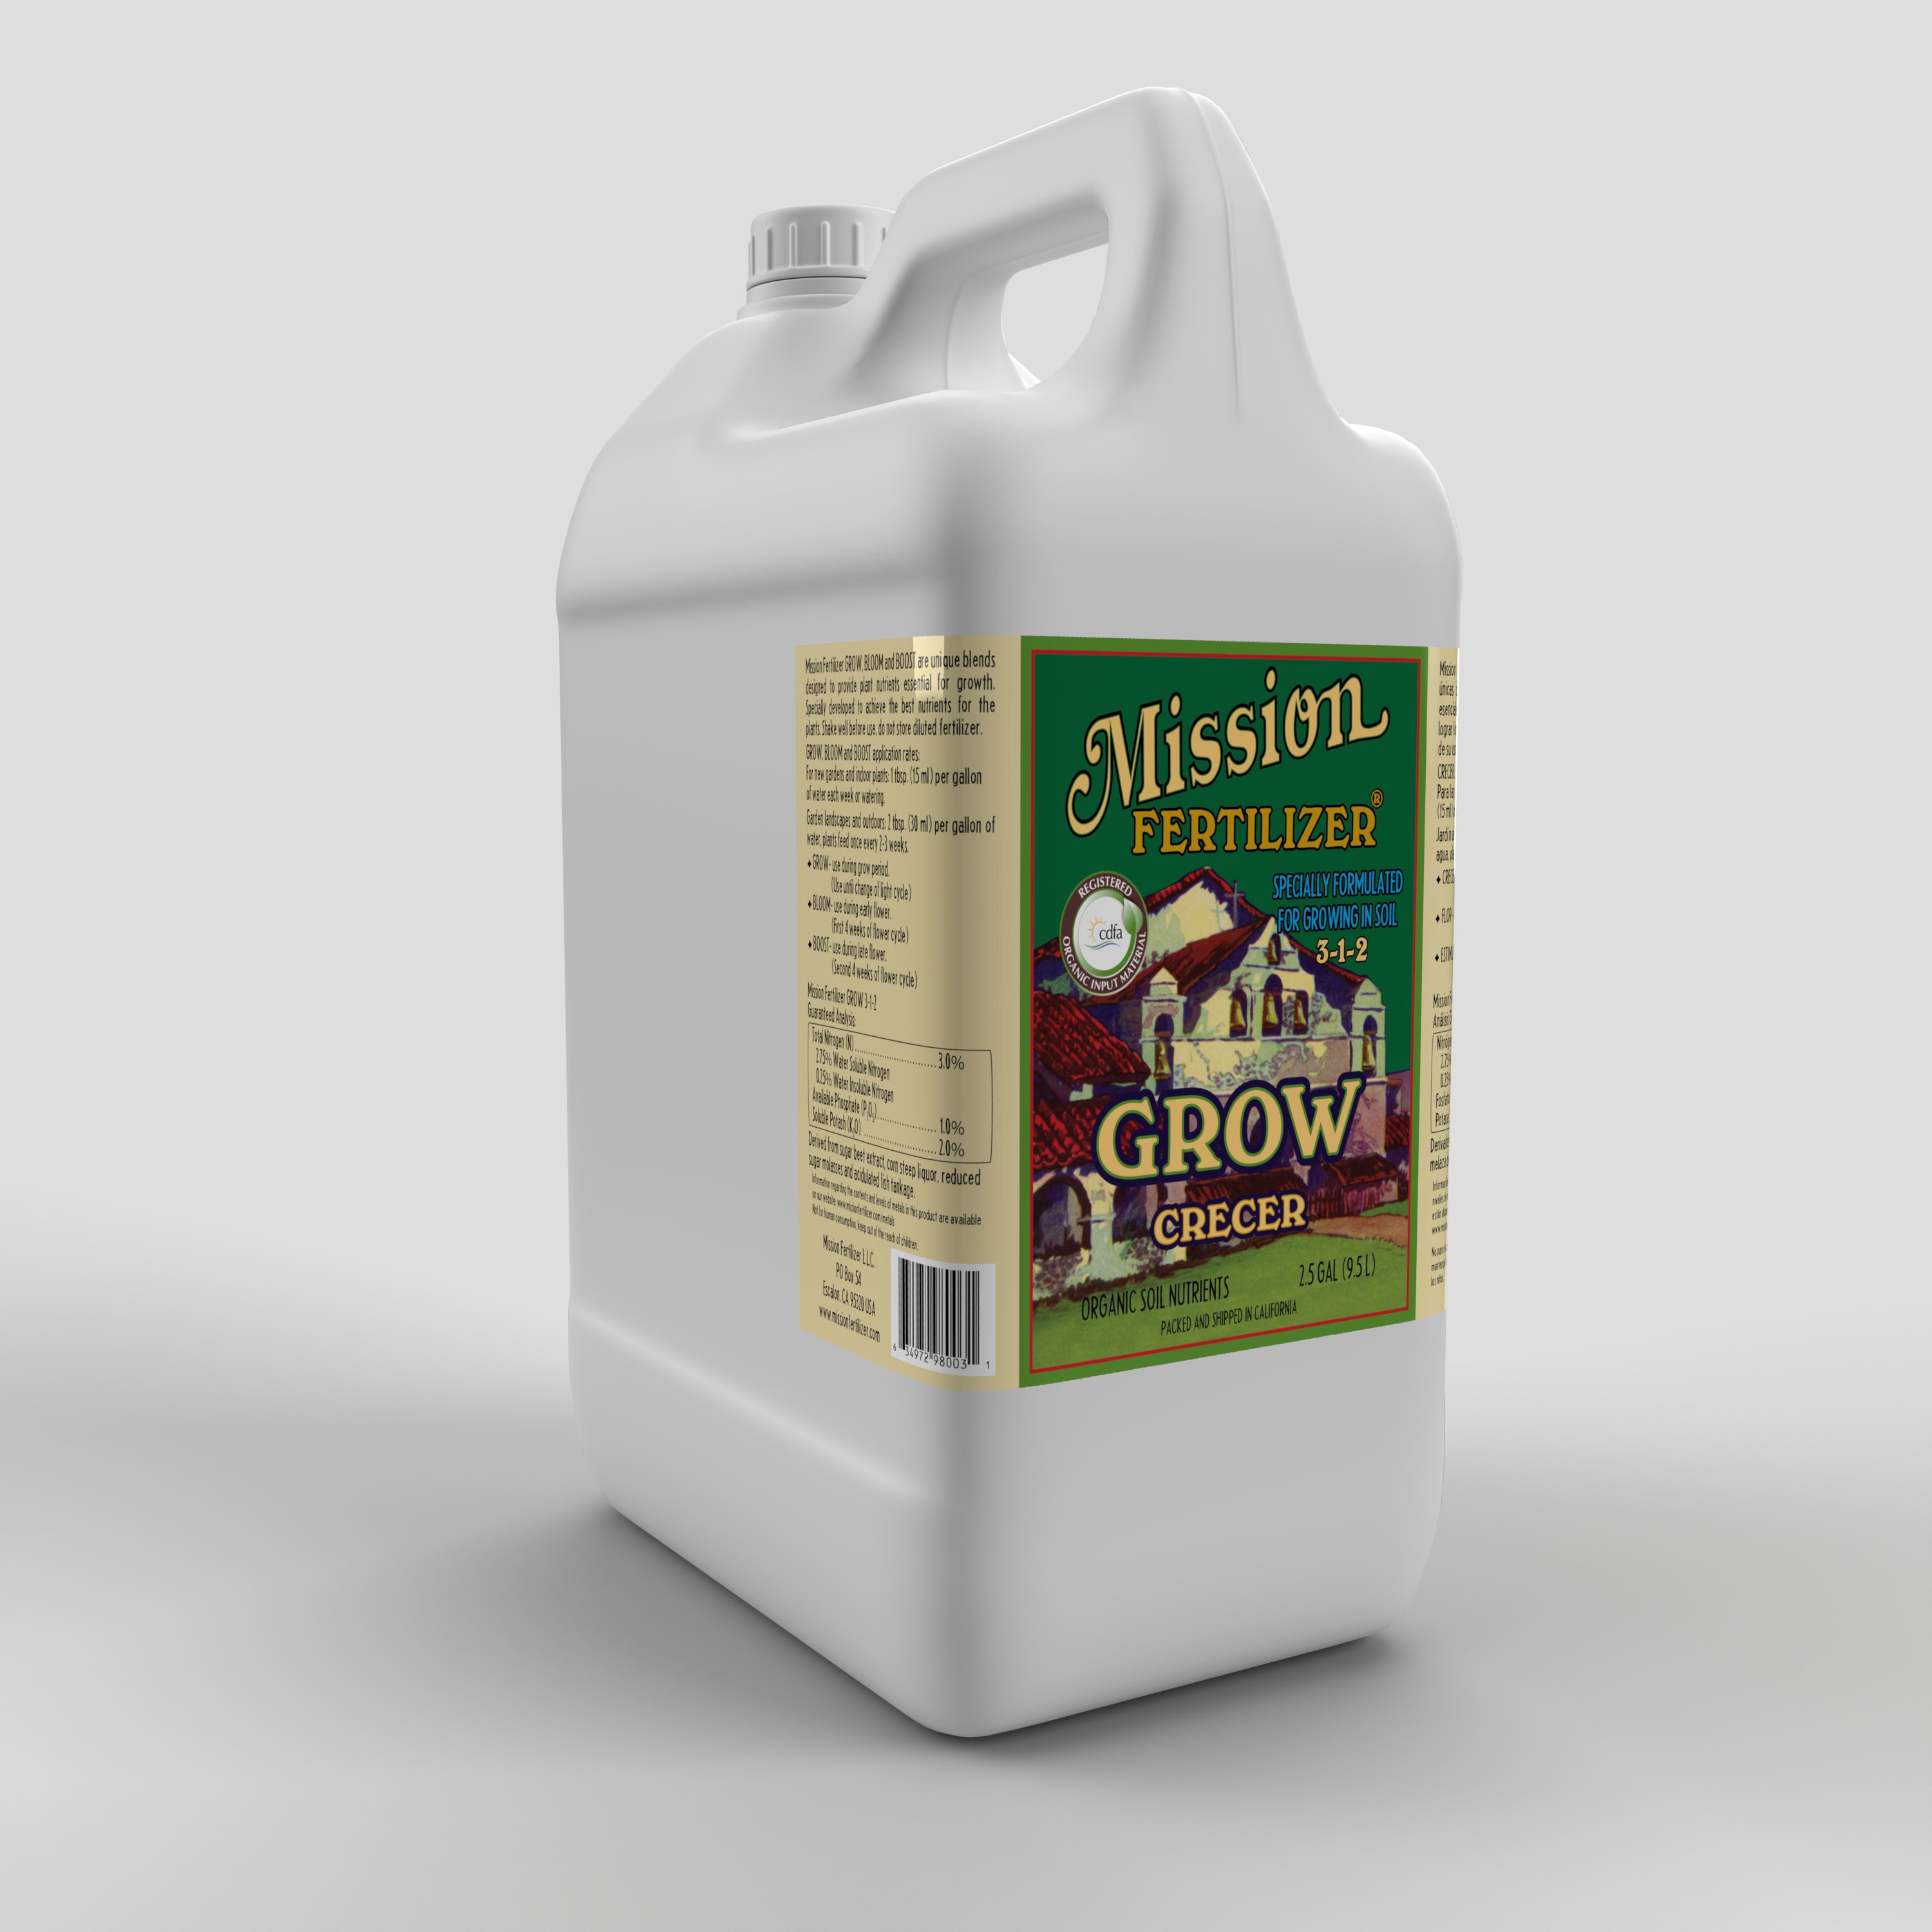 Mission GROW 3-1-2 Liquid (2.5 Gallon)